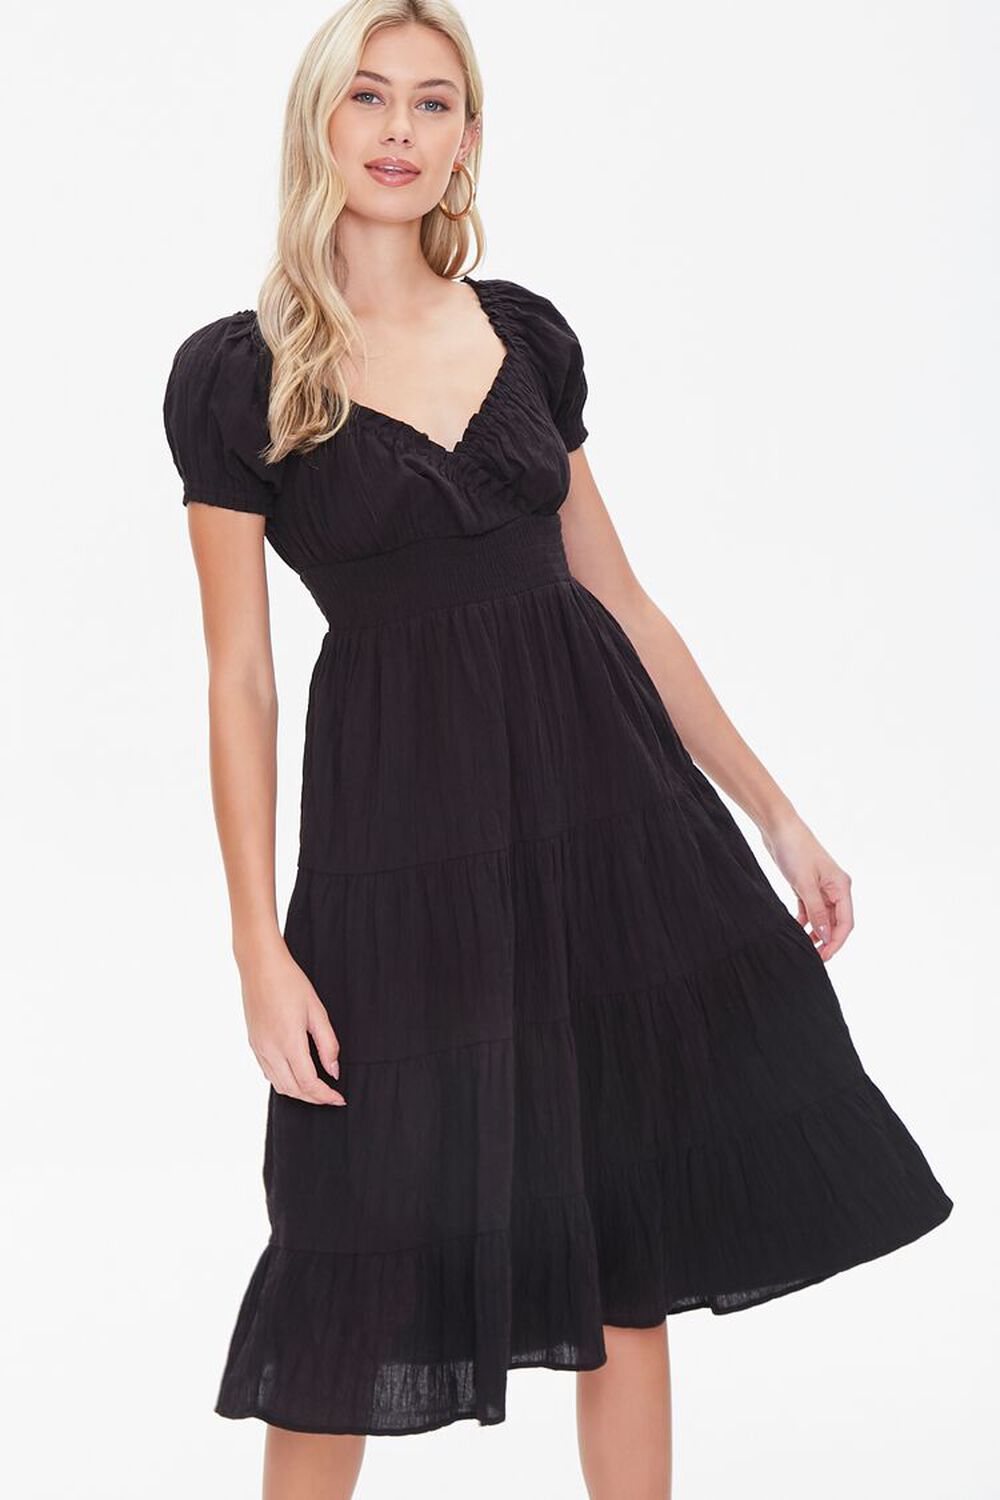 BLACK Tiered Ruffle-Trim Dress, image 1